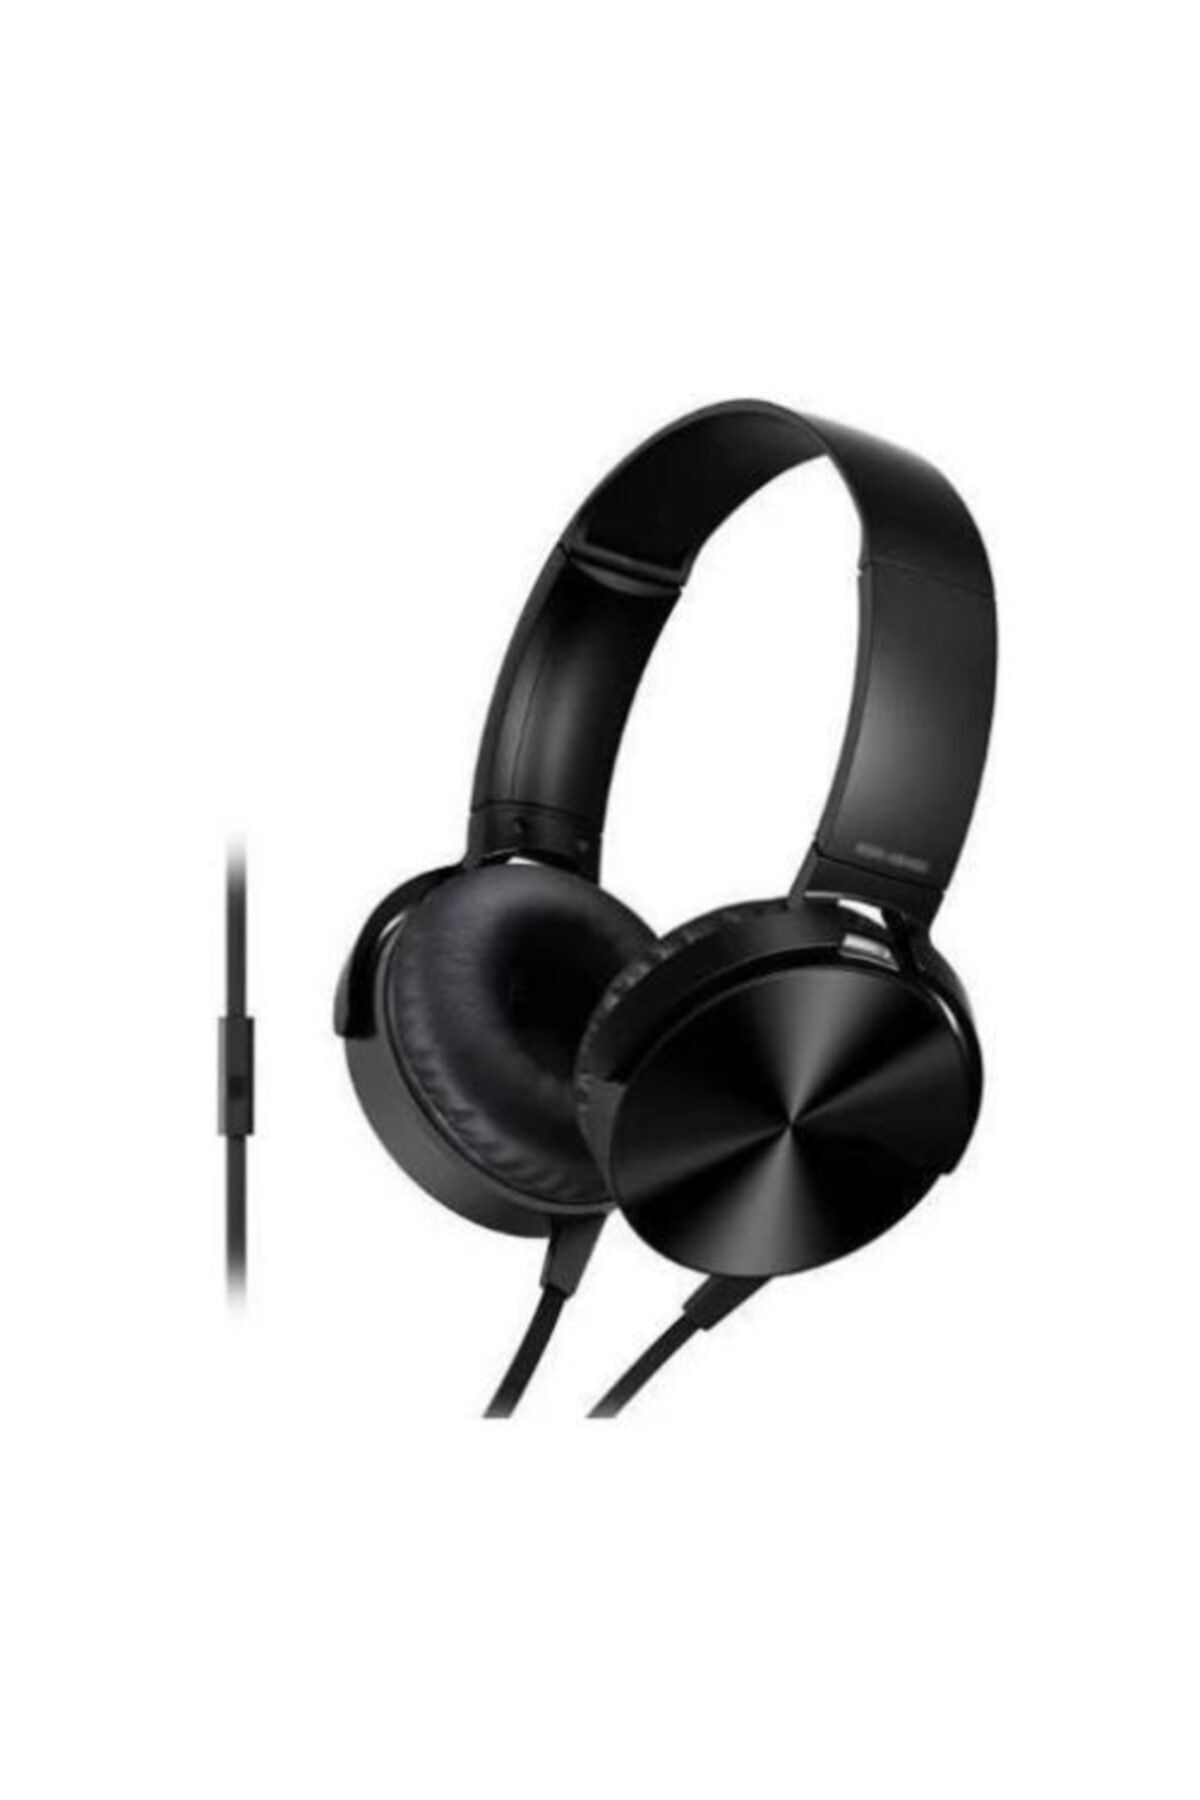 Sony Siyah Mikrofonlu Kulaküstü Kulaklık